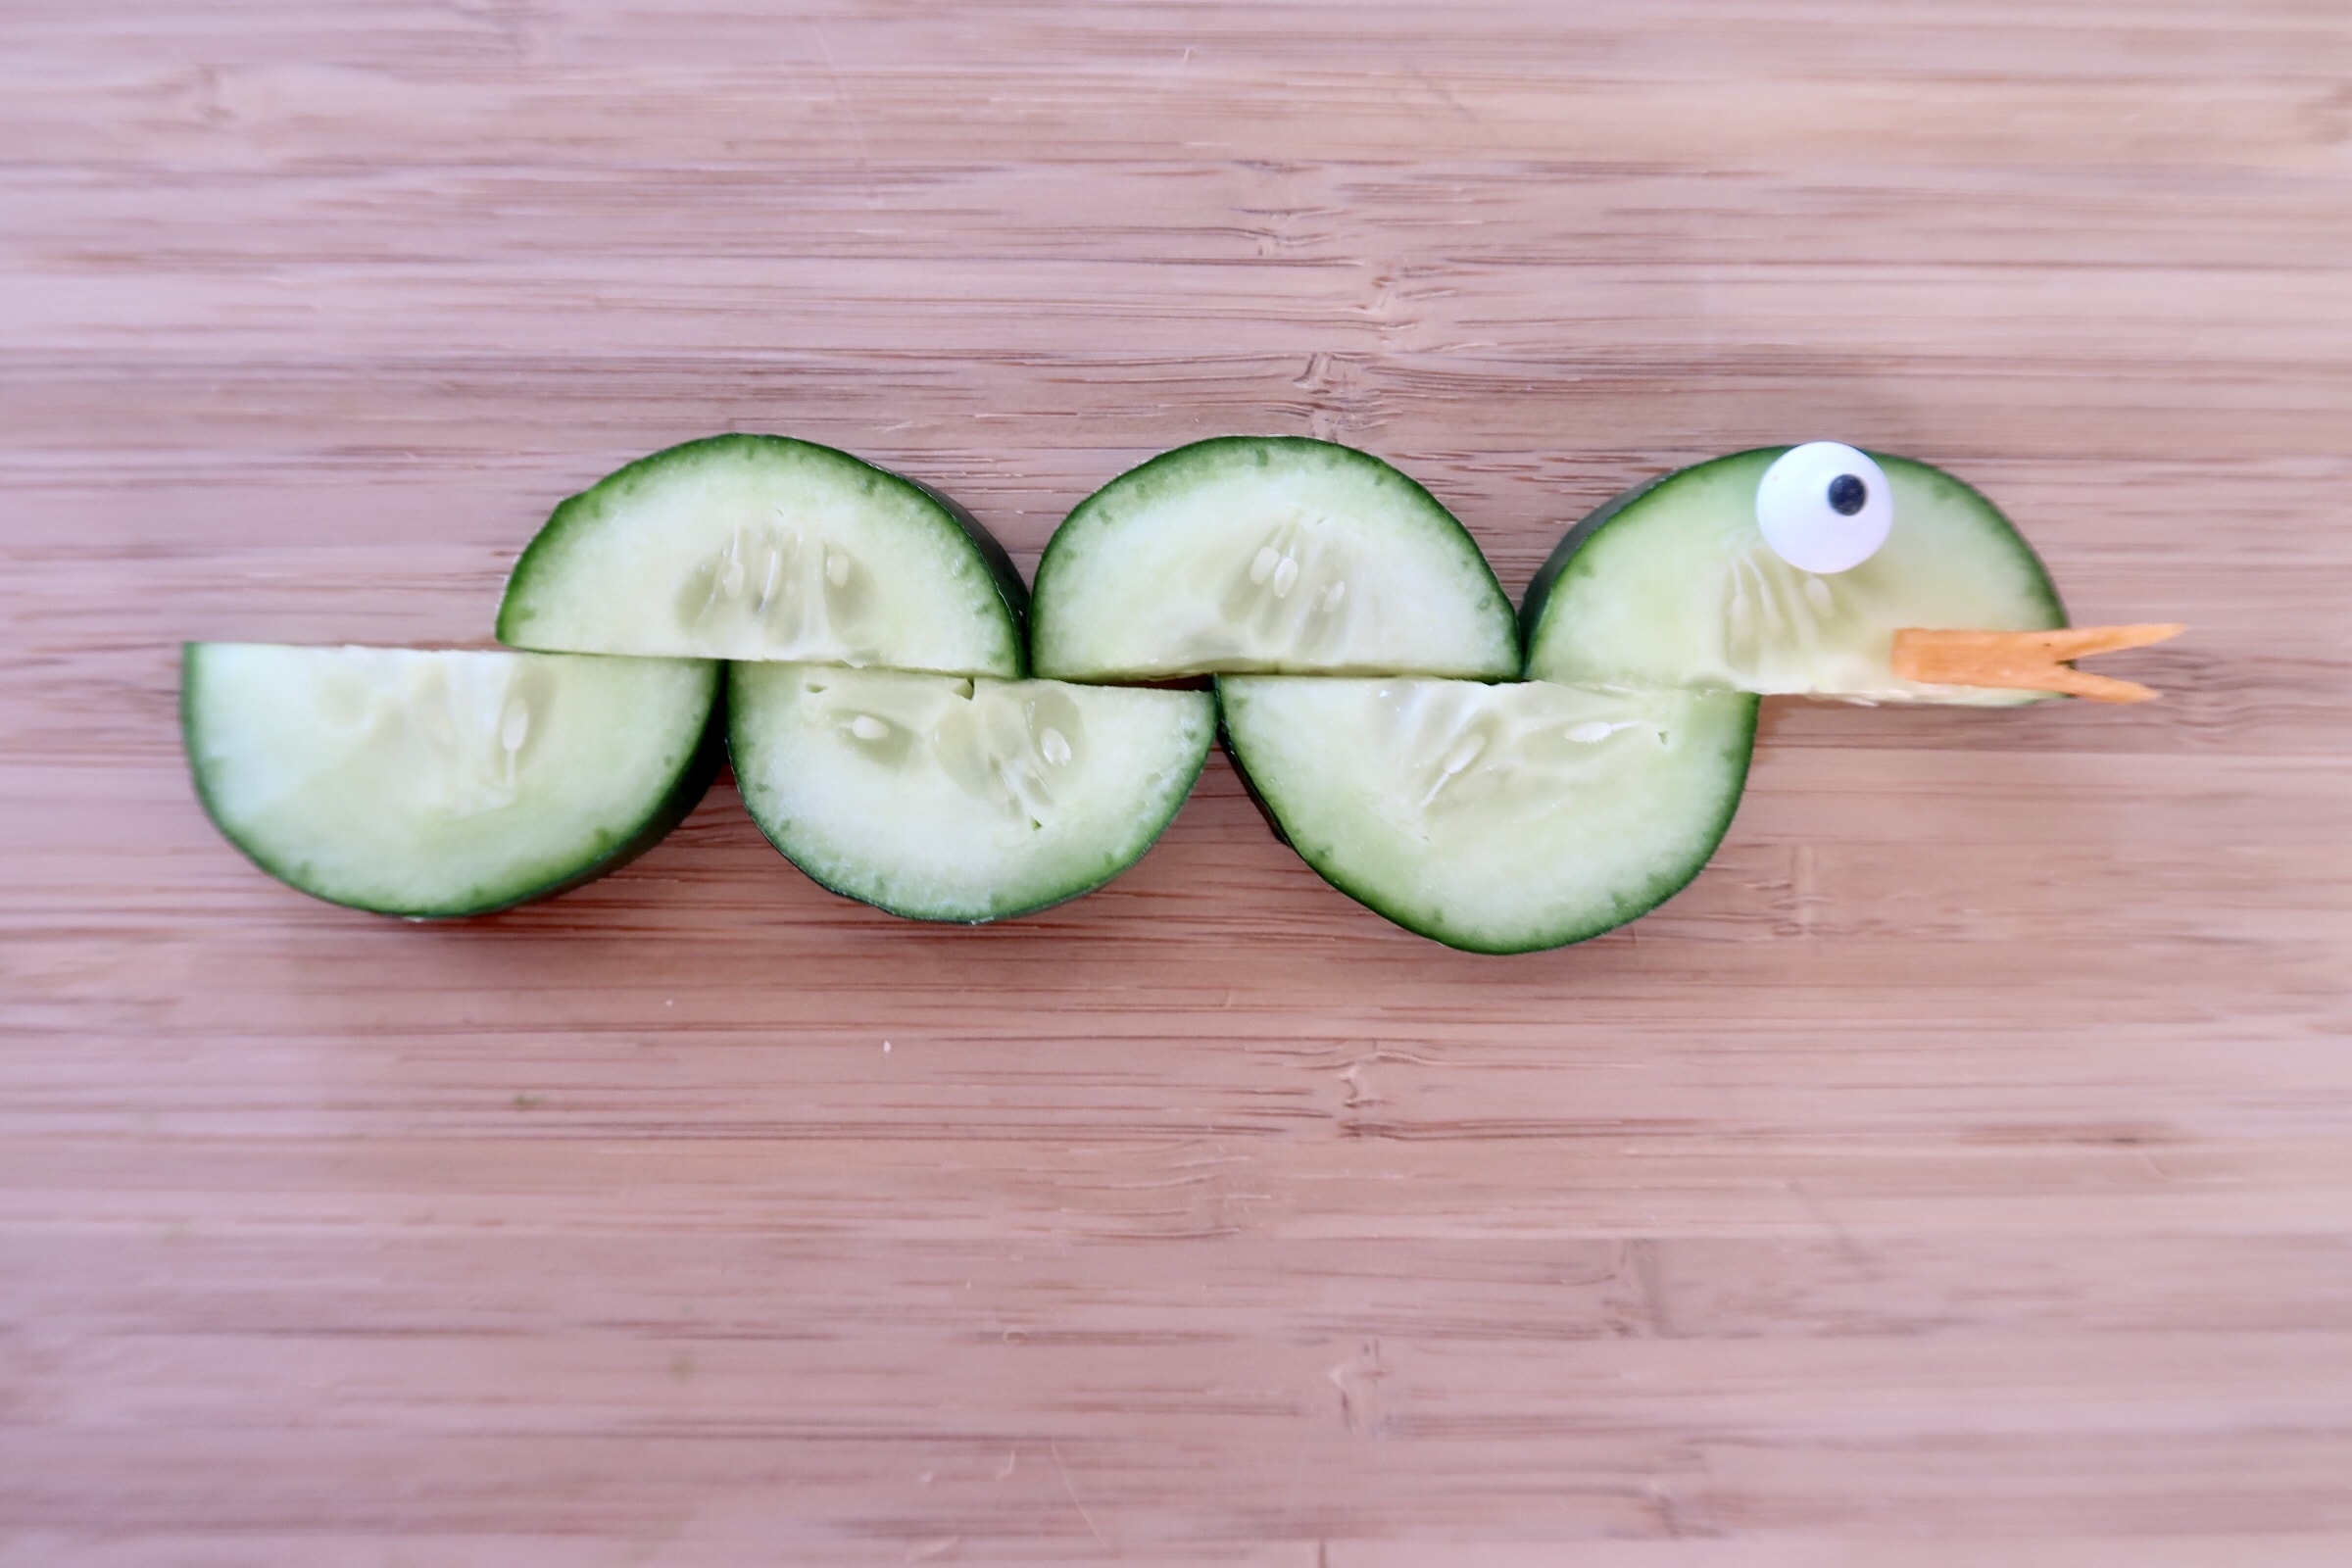 Cucumber Snack Vegetable Art Recipe for Picky Eaters | Erin Palinski ...